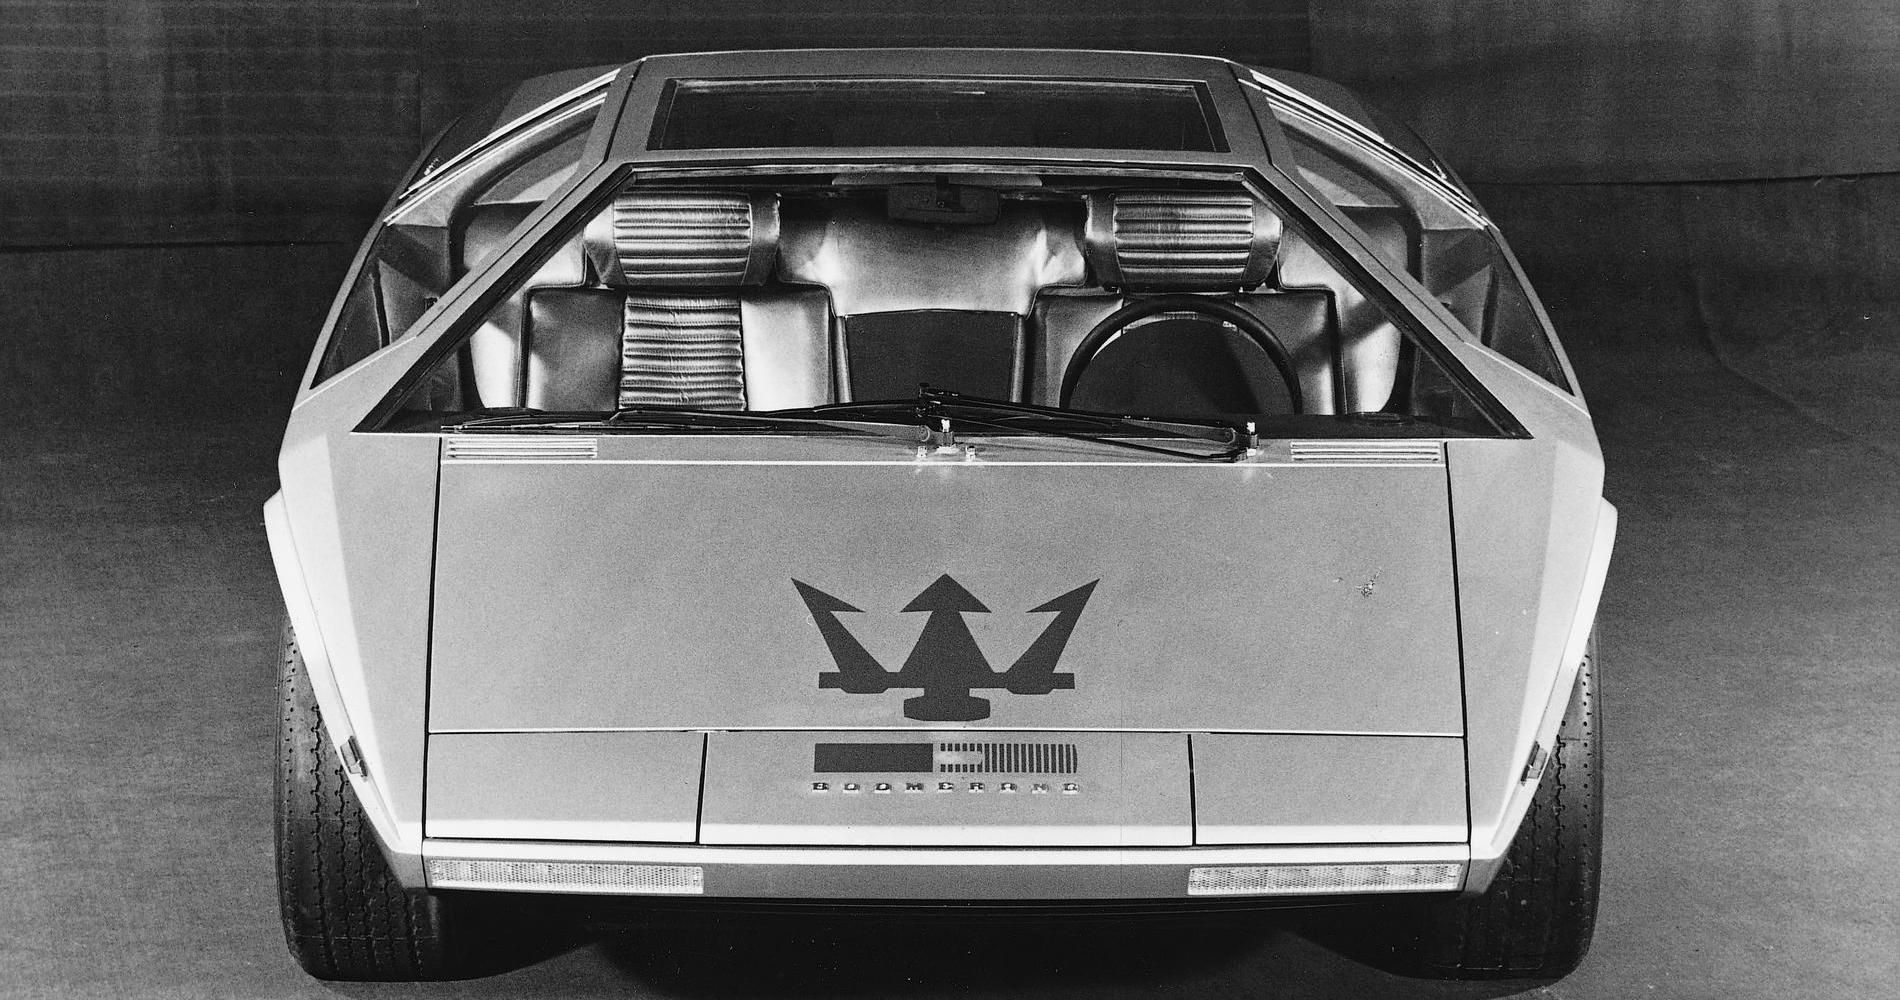 Maserati Boomerang V8 concept